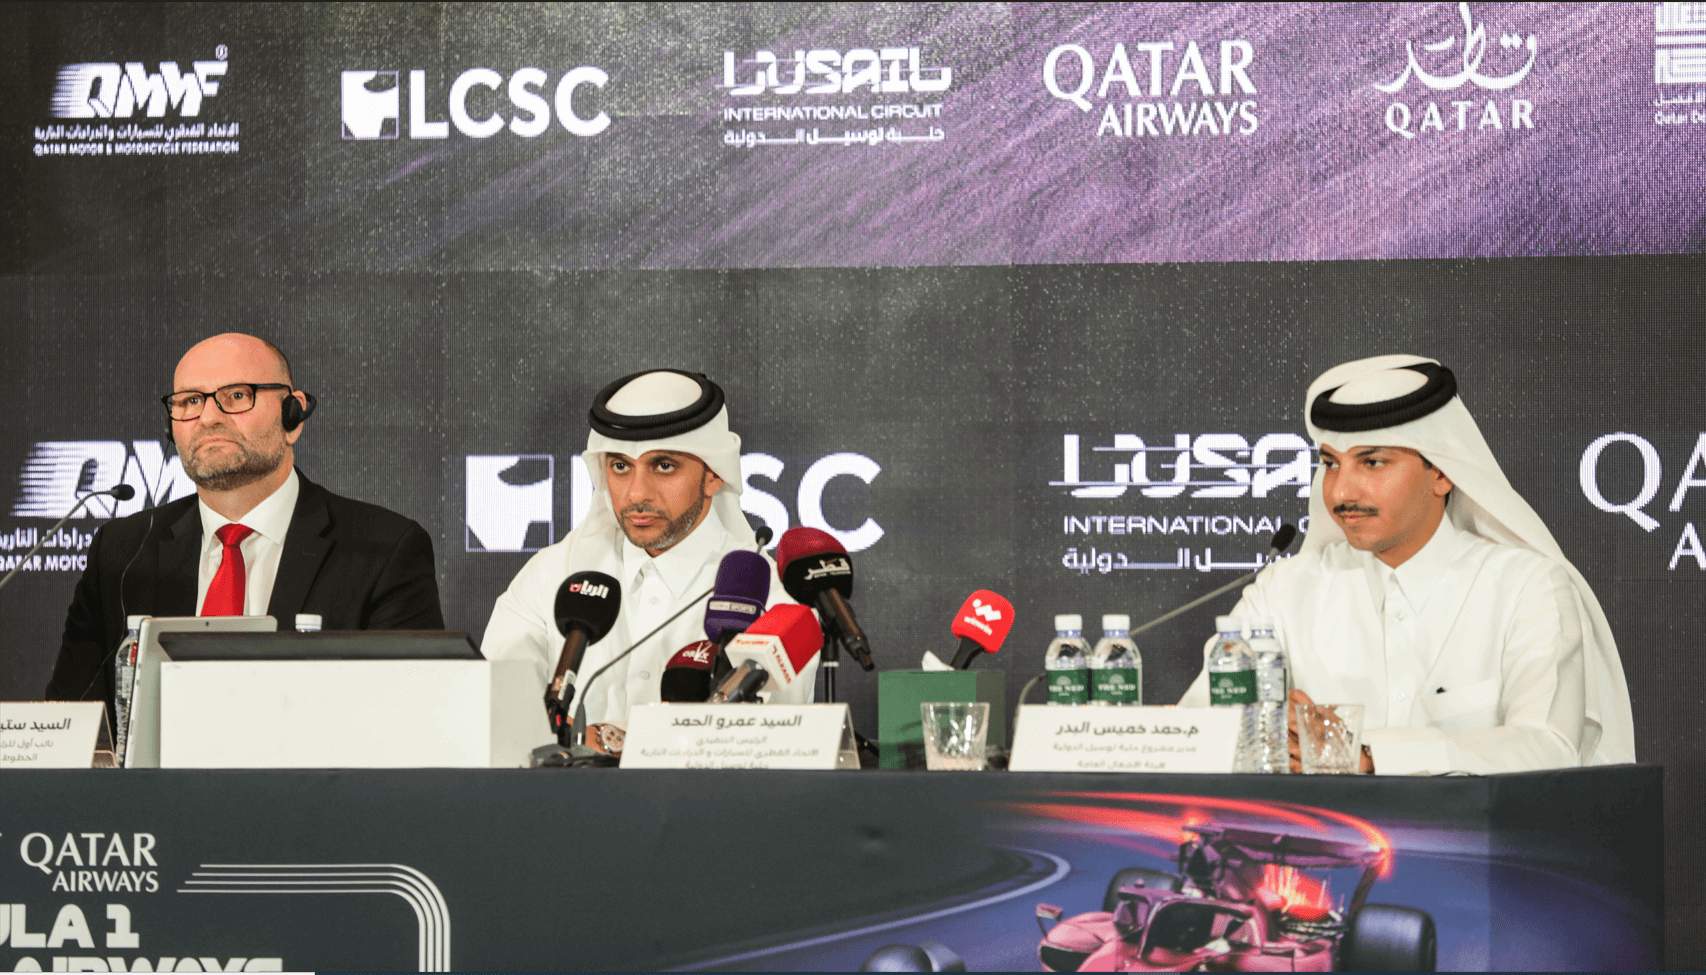 Lusail International Circuit Announces Early Bird Ticket Offers for the Formula 1 Qatar Airways Qatar Grand Prix®